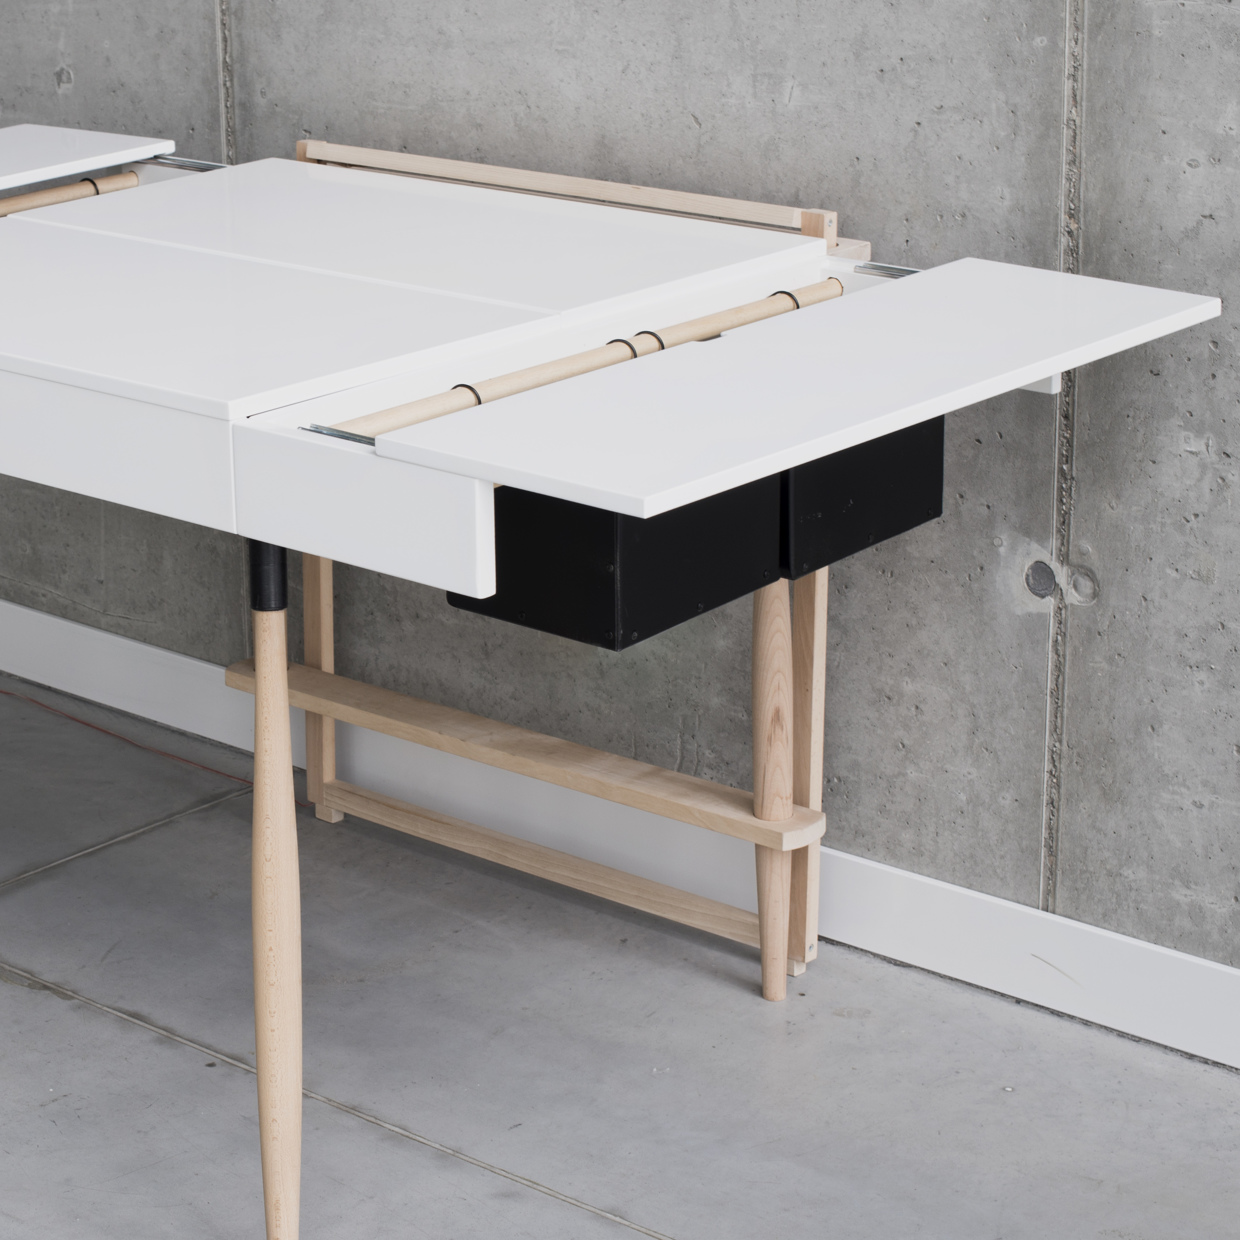 Desk Concept / Agnieszka Graczykowska (14)